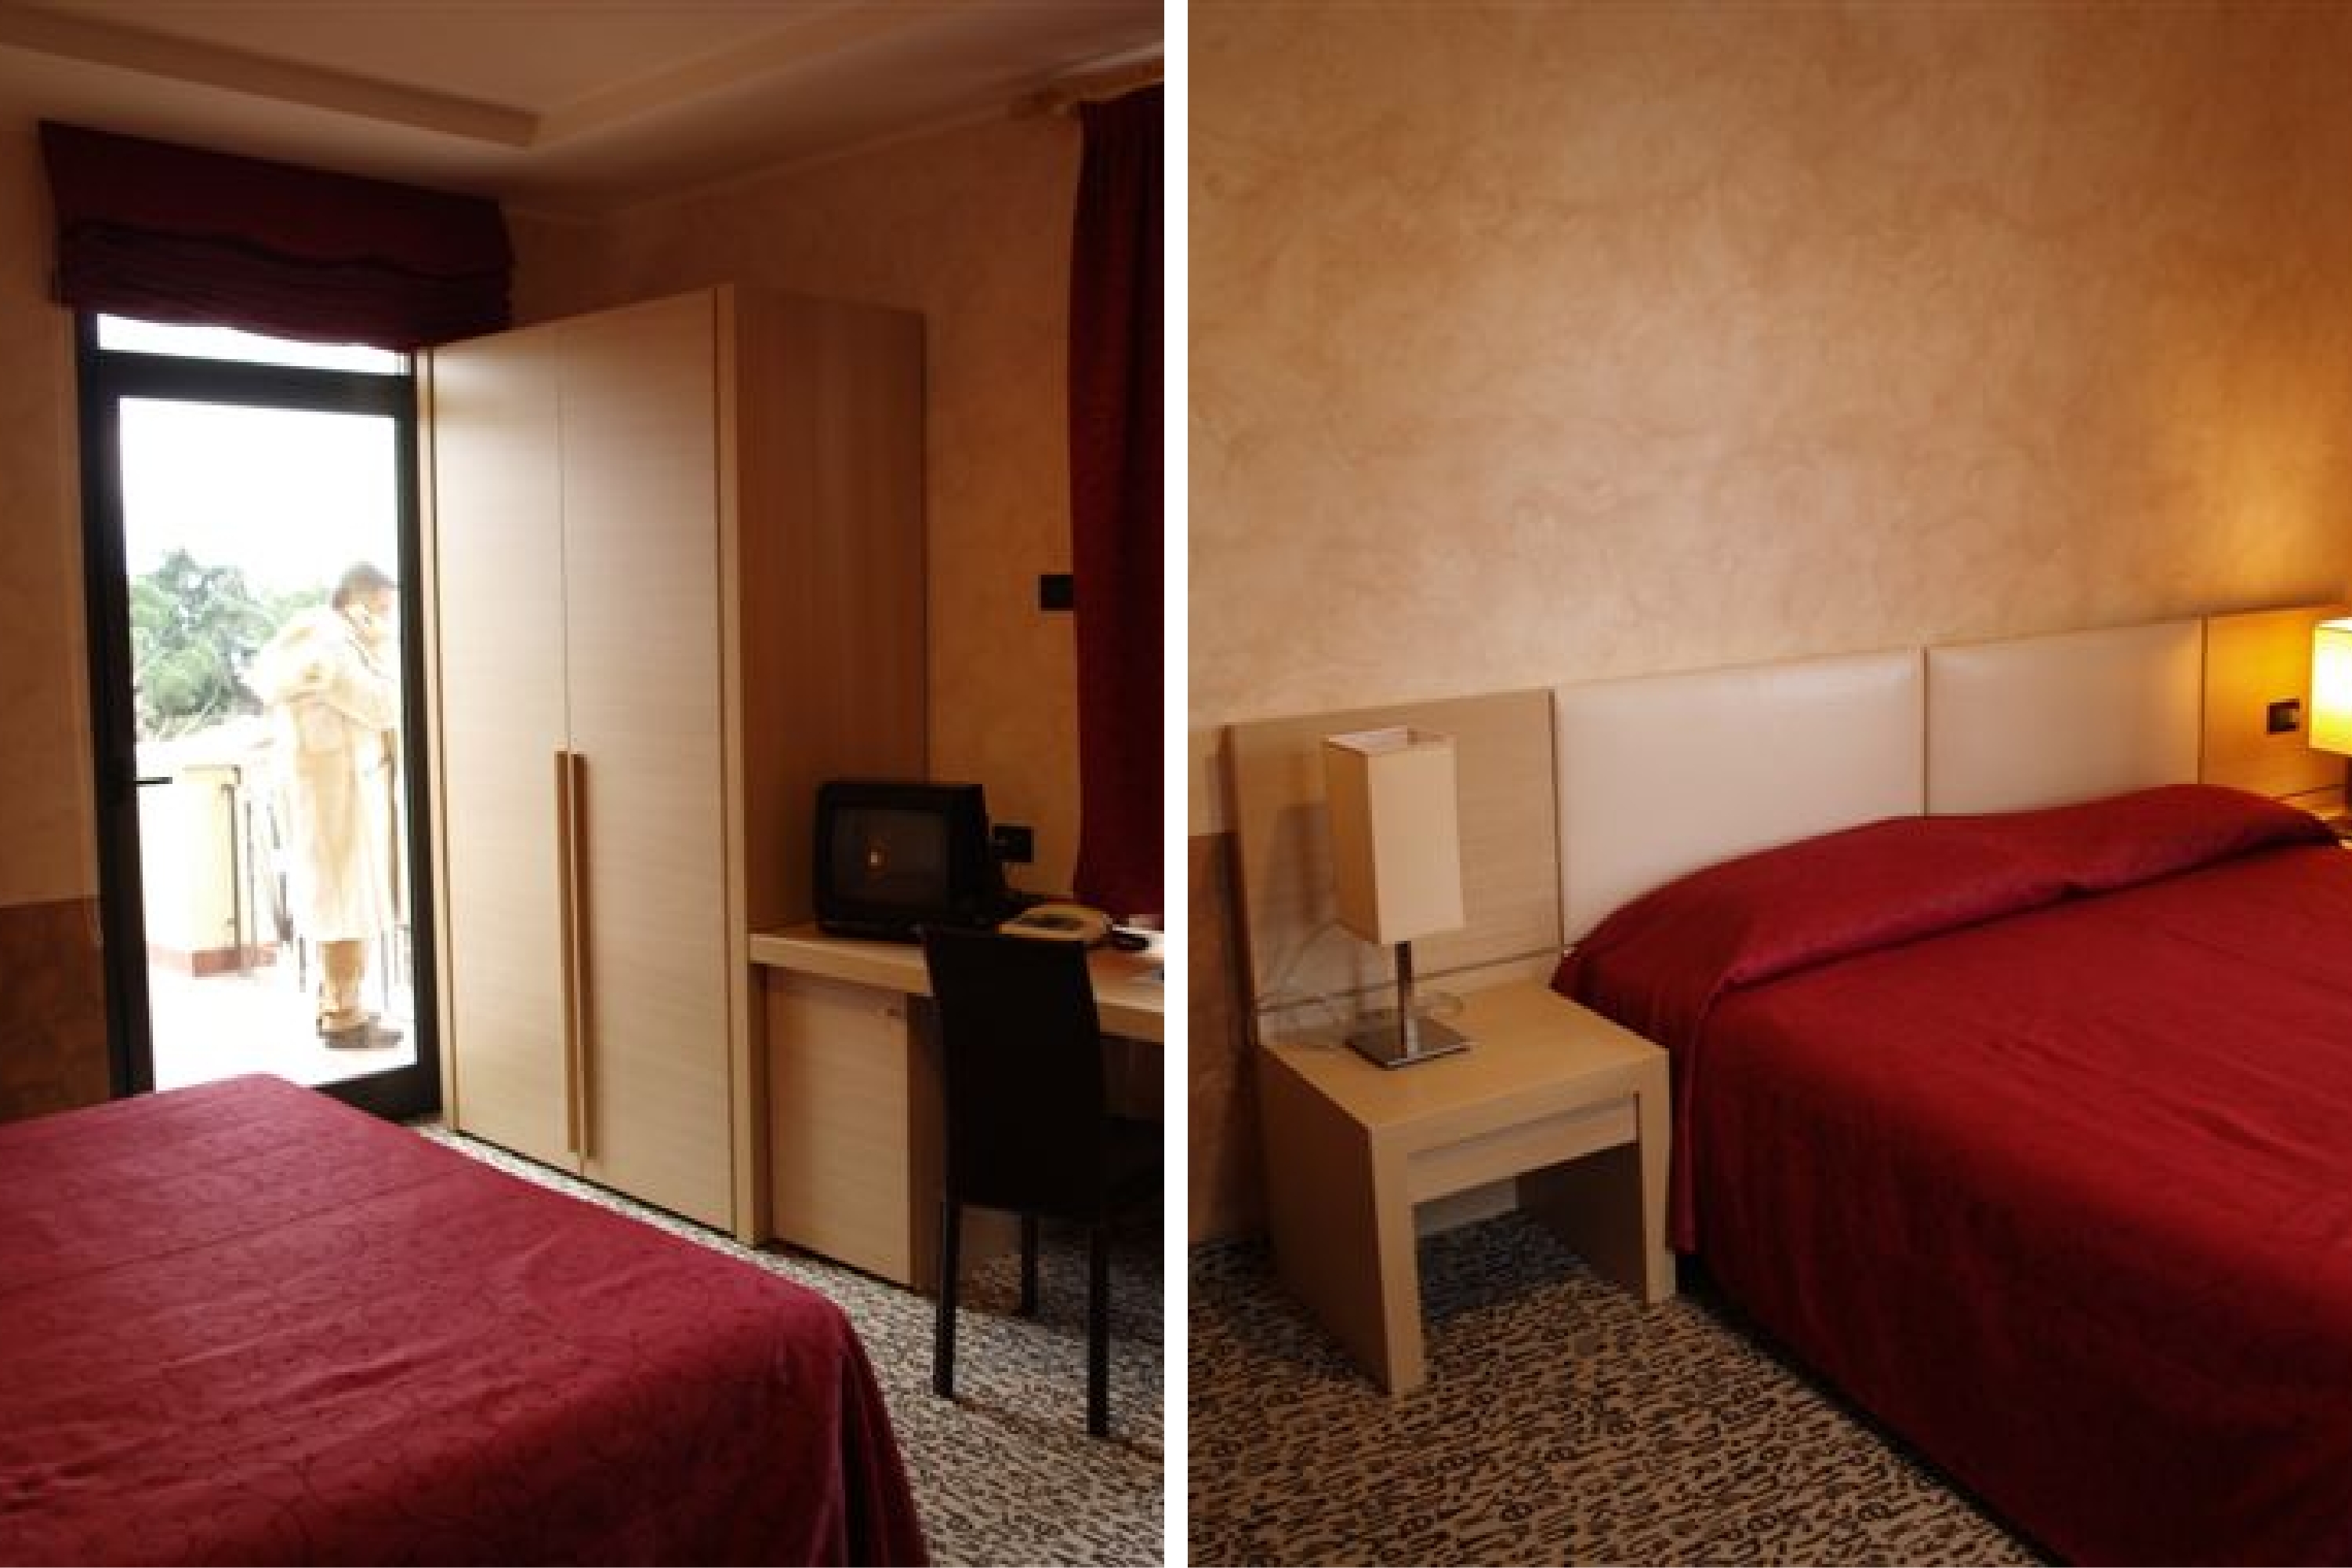 Domus Park Hotel – Frascati - Homes